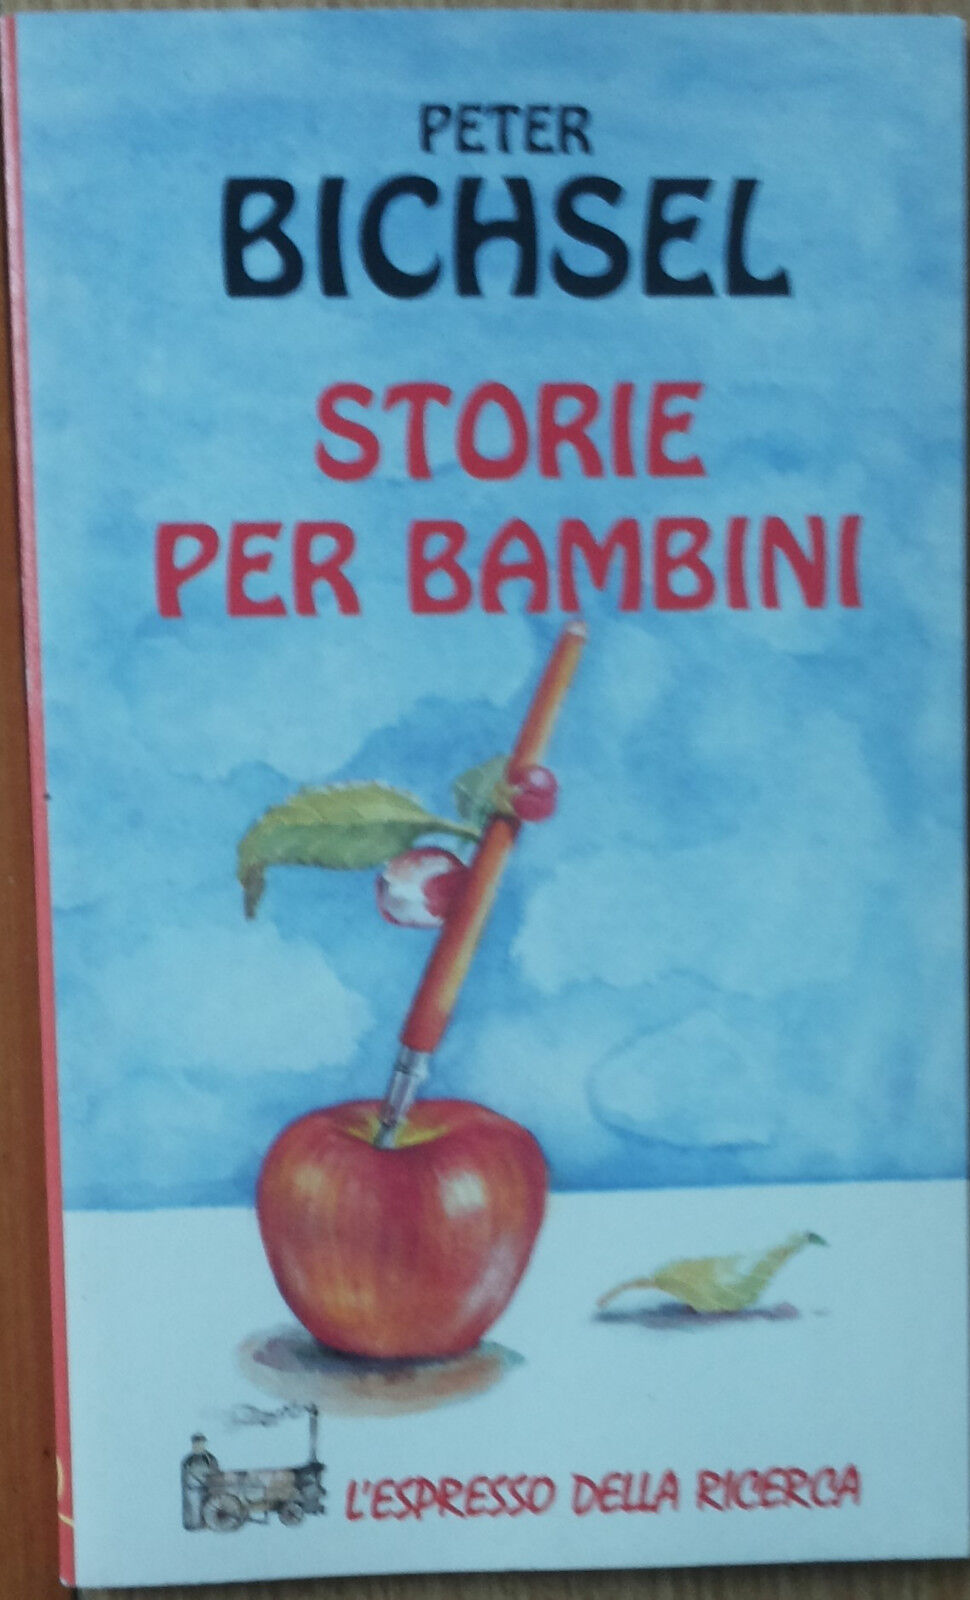 Storie per bambini - Bichsel - Giunti Demetra,1996 - R